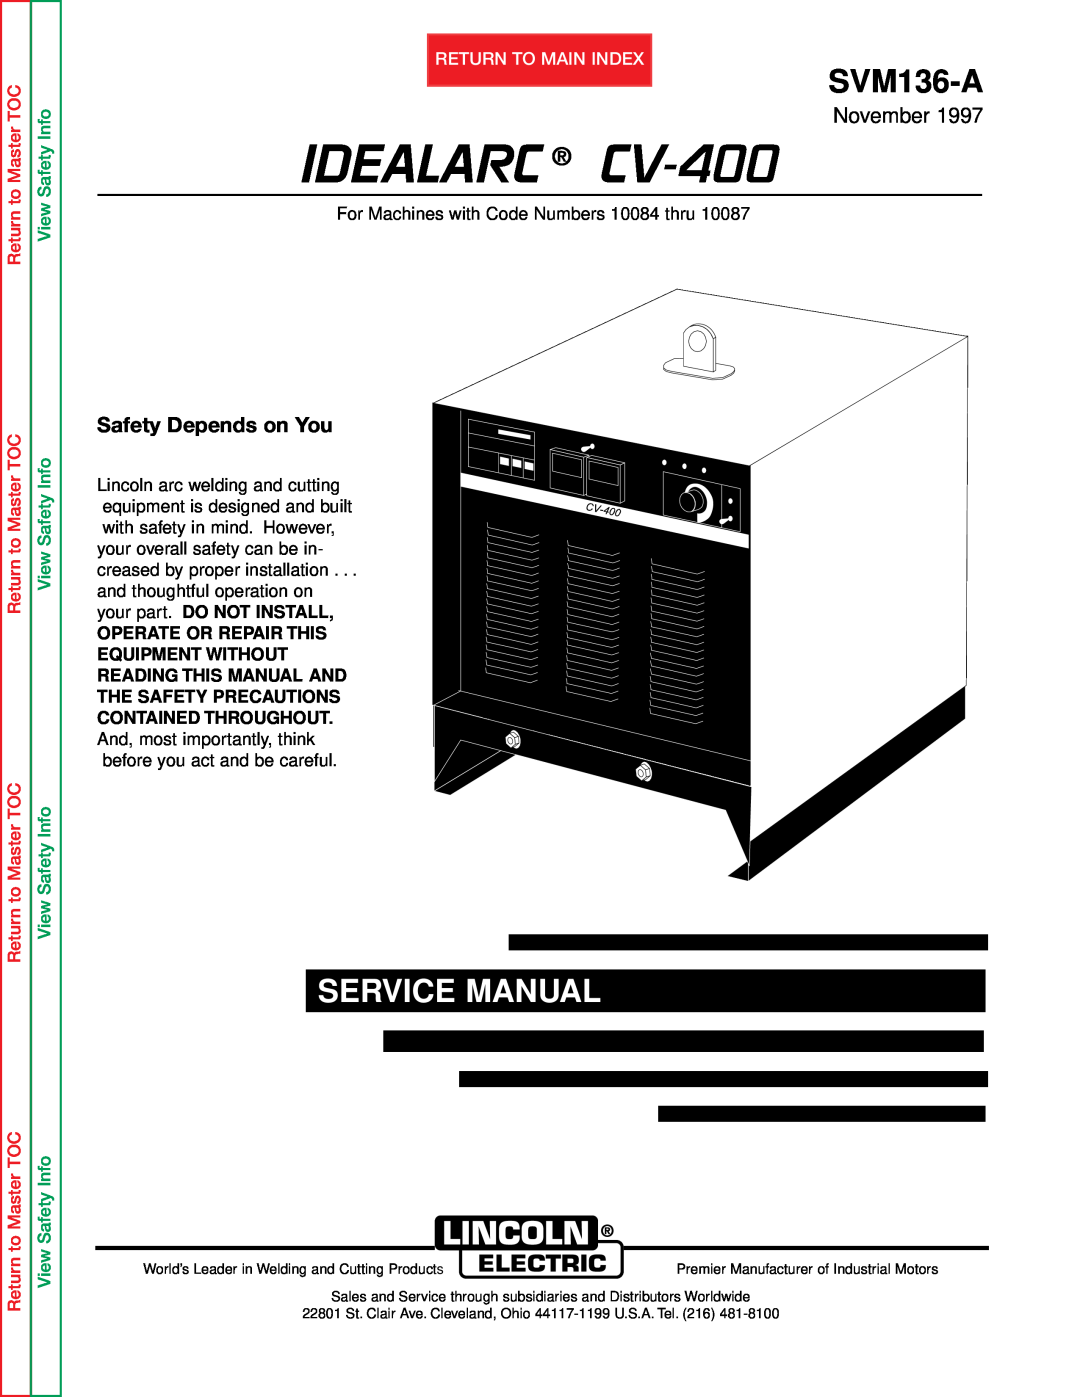 Lincoln Electric SVM136-A service manual IDEALARC CV-400, Service Manual, November, Return to Master TOC 